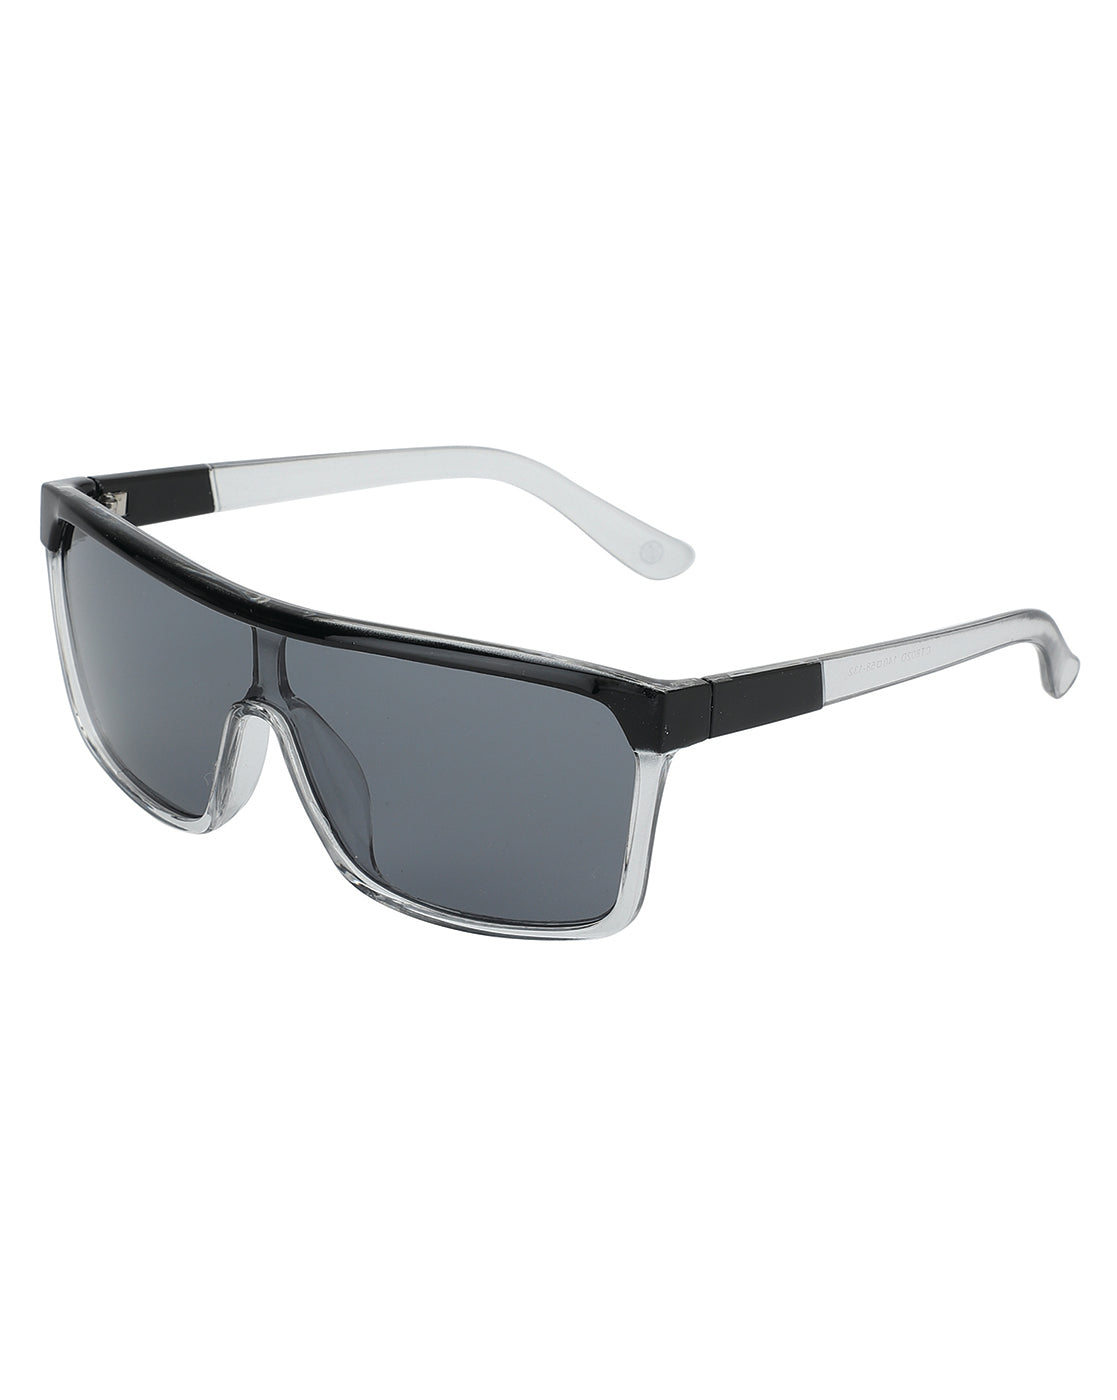 Thirstday Matte Black Women's Shield Sunglasses | Le Specs